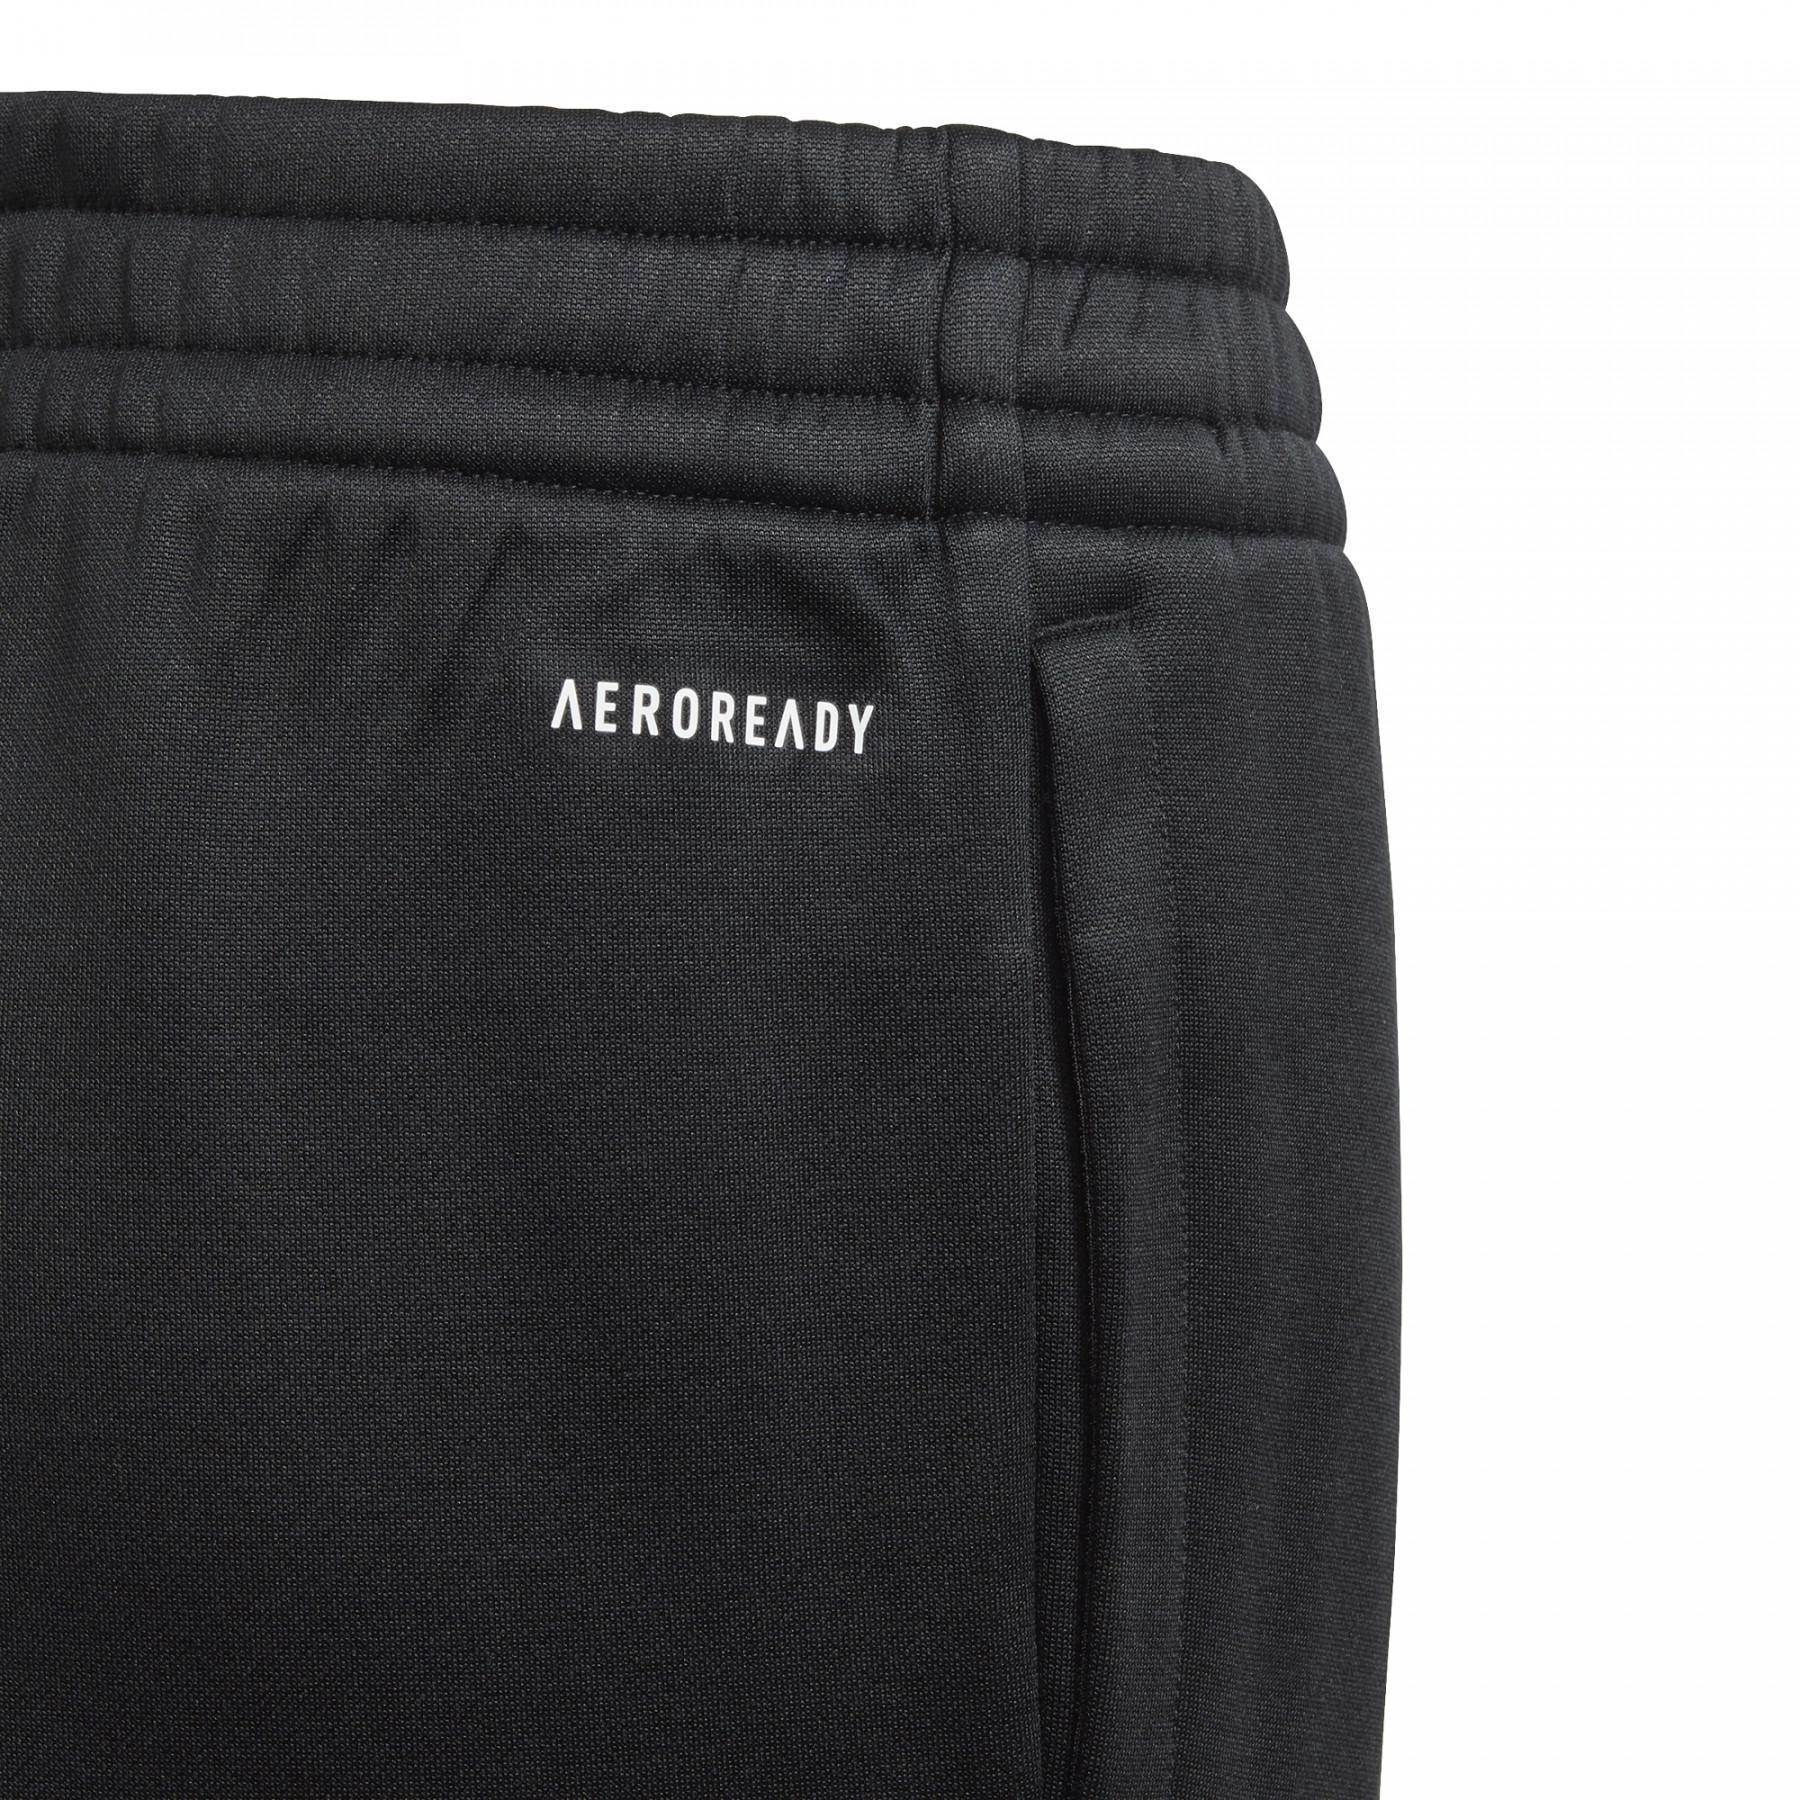 Children's trousers adidas Aeroeady